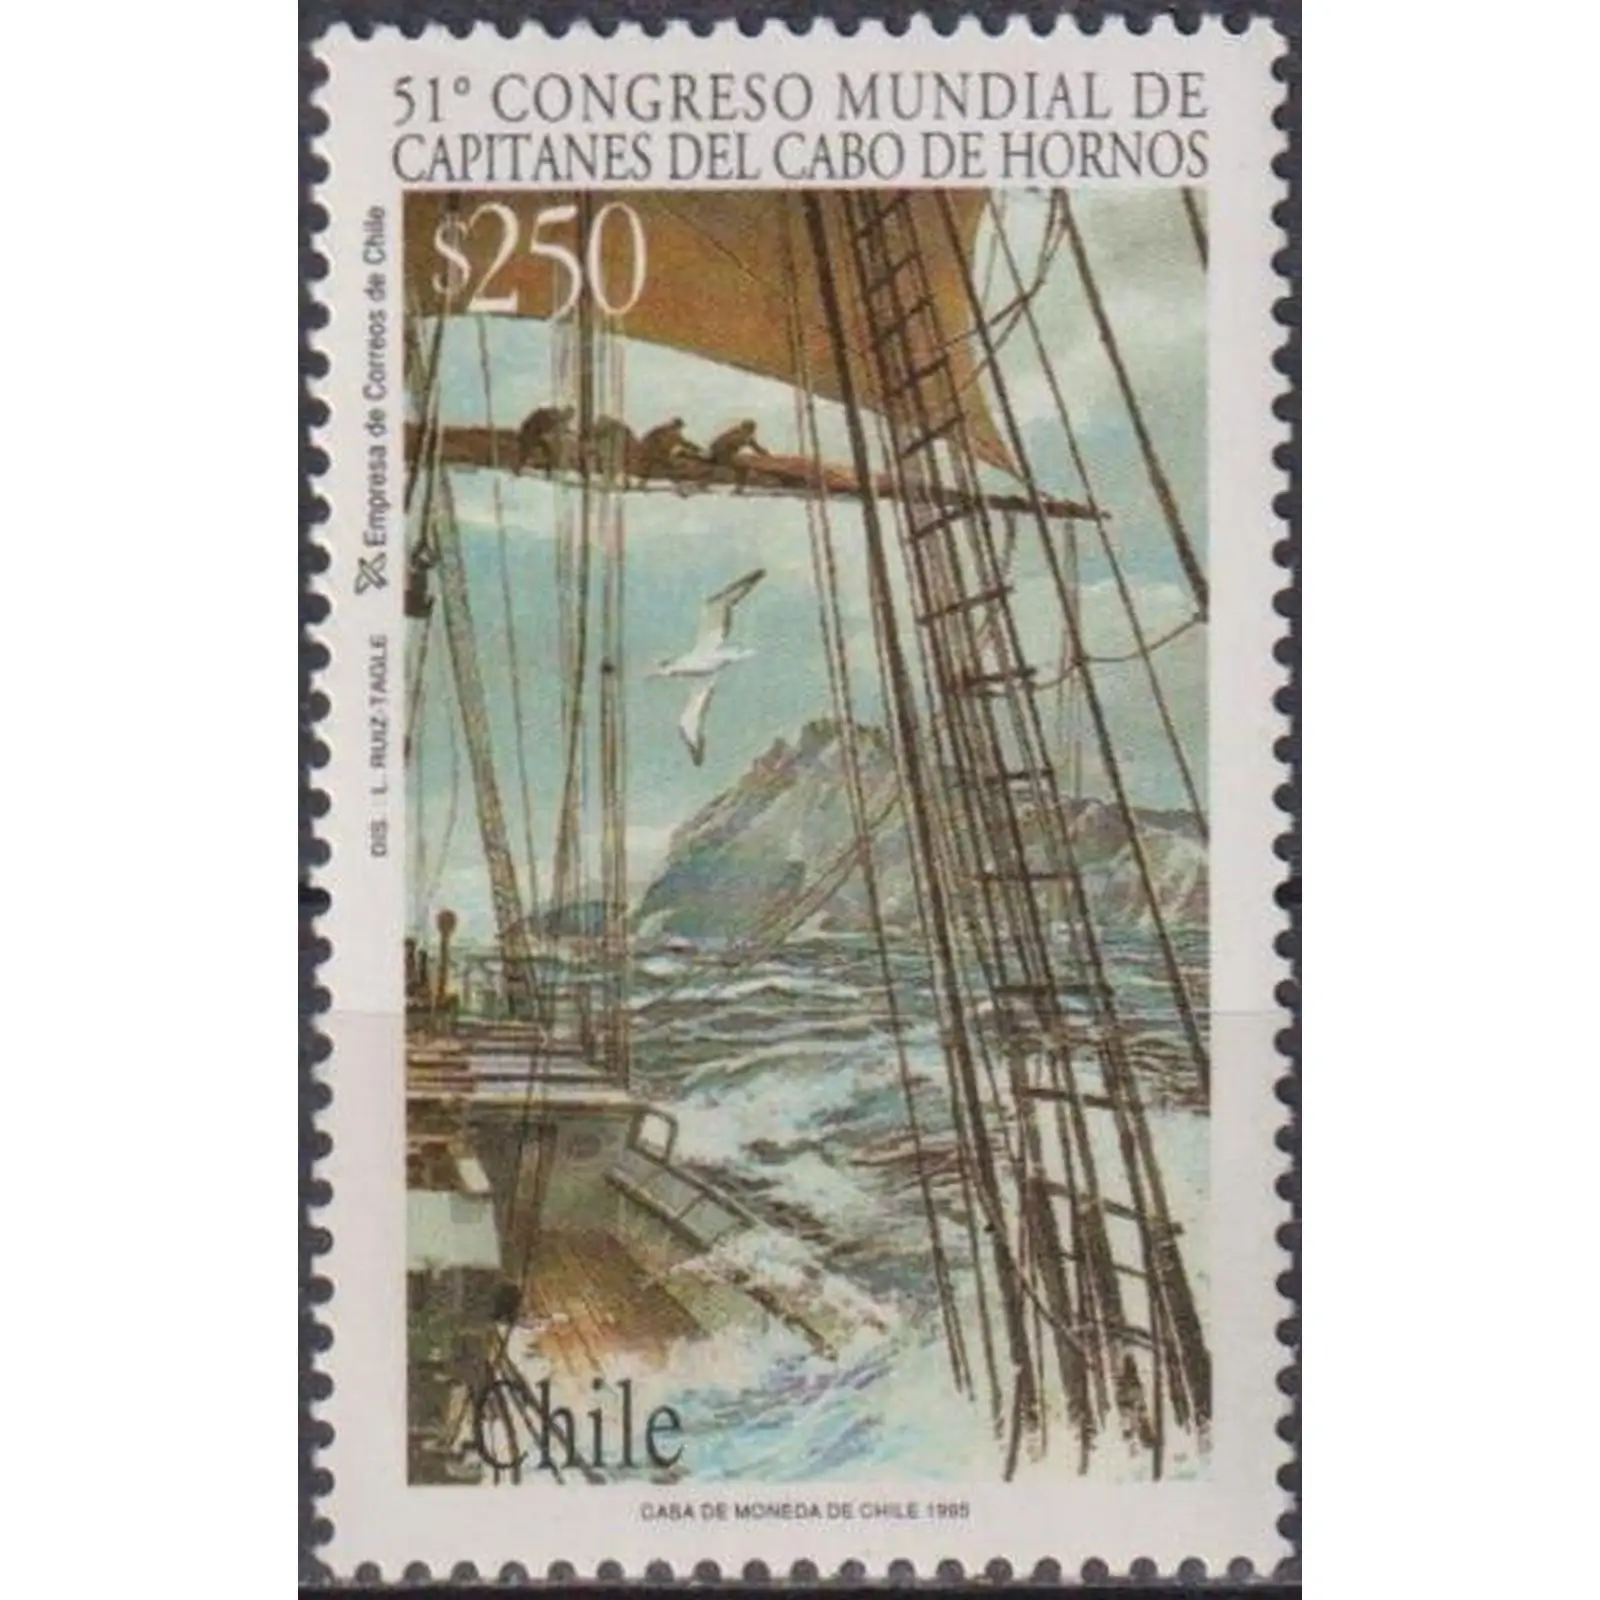 Почтовые марки Уругвай корабли 1995. Марки с кораблями 1900. Антарктида на марках Чили. Sverige 55 марки парусник цена. Почтовые марки 1995 года